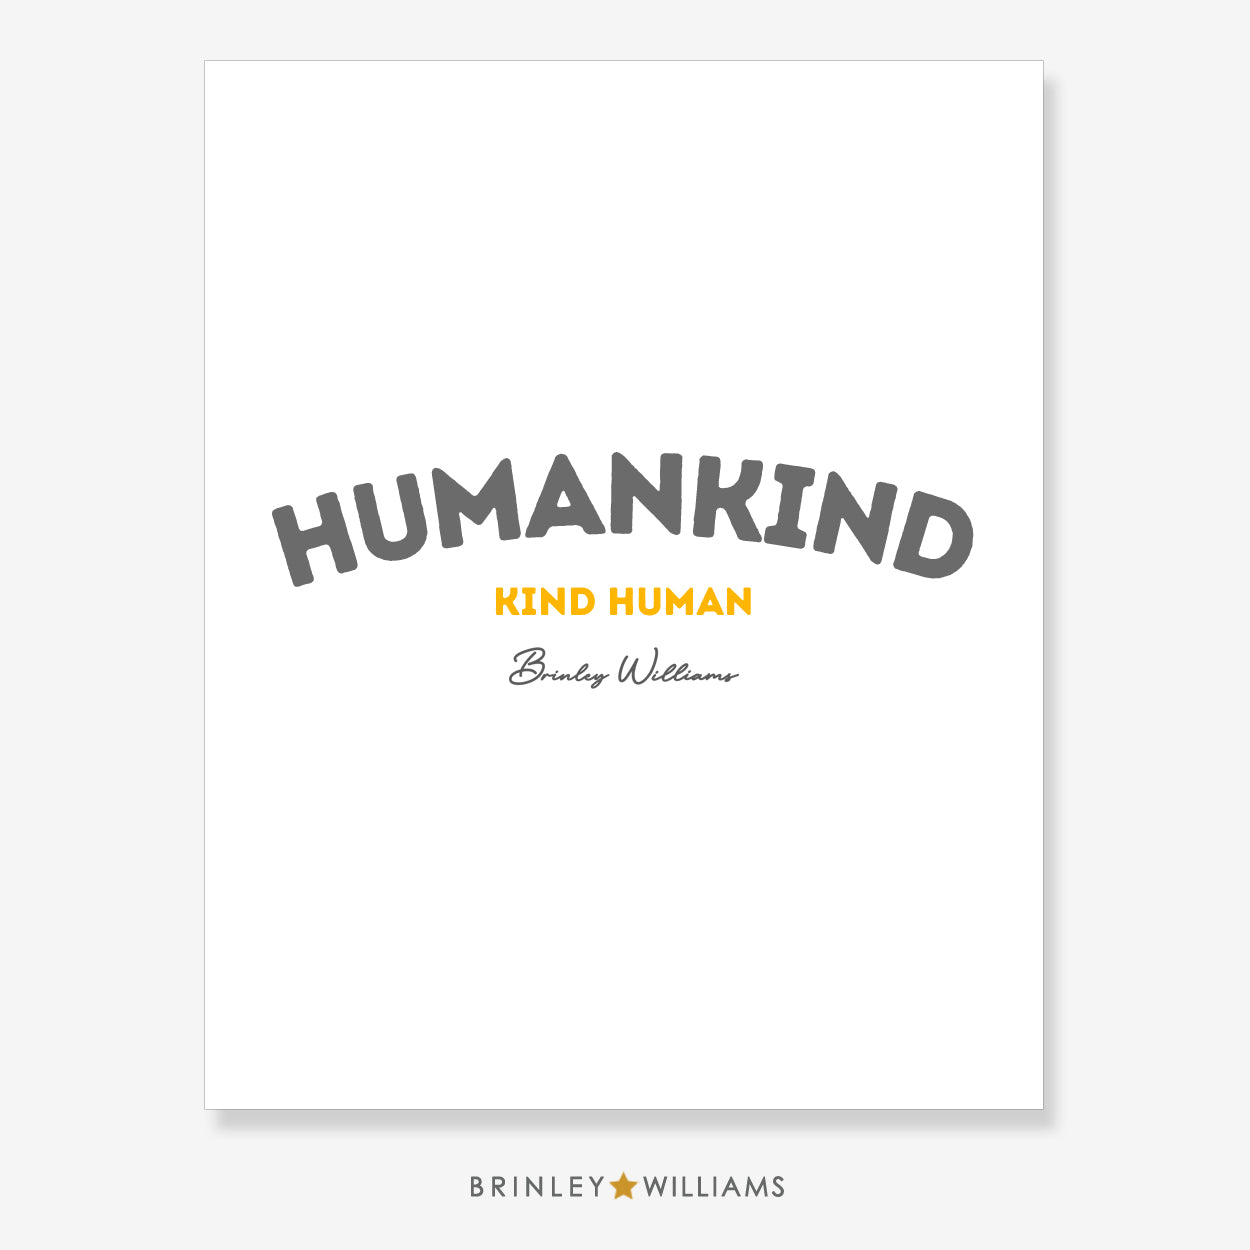 Humankind - kind human Wall Art Poster - Yellow